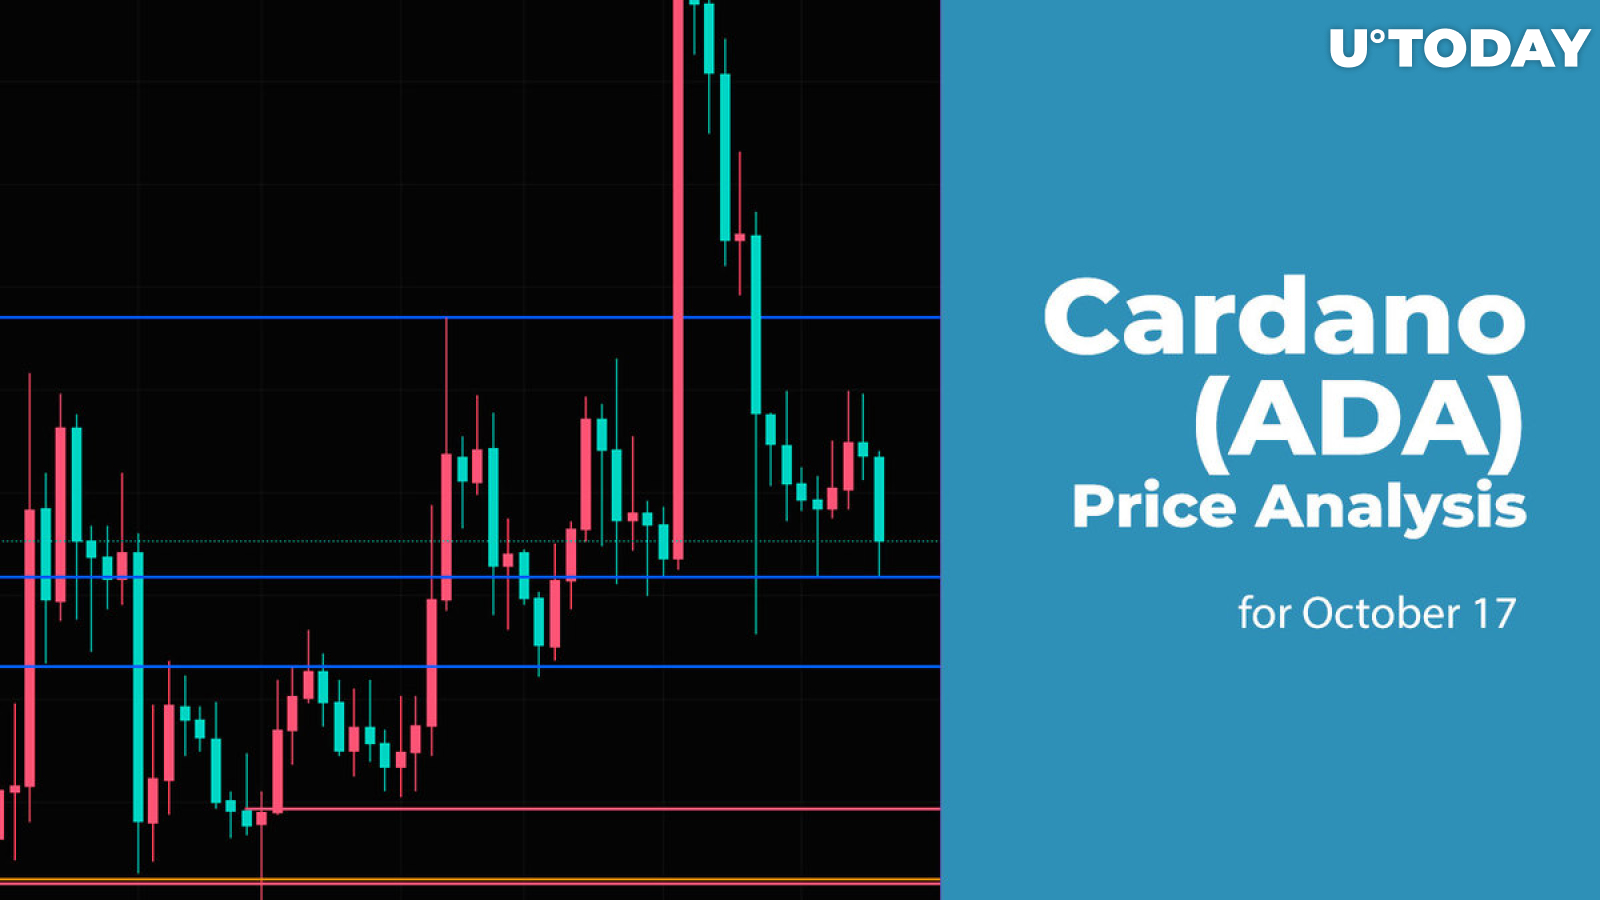 Cardano (ADA) Price Analysis for October 17